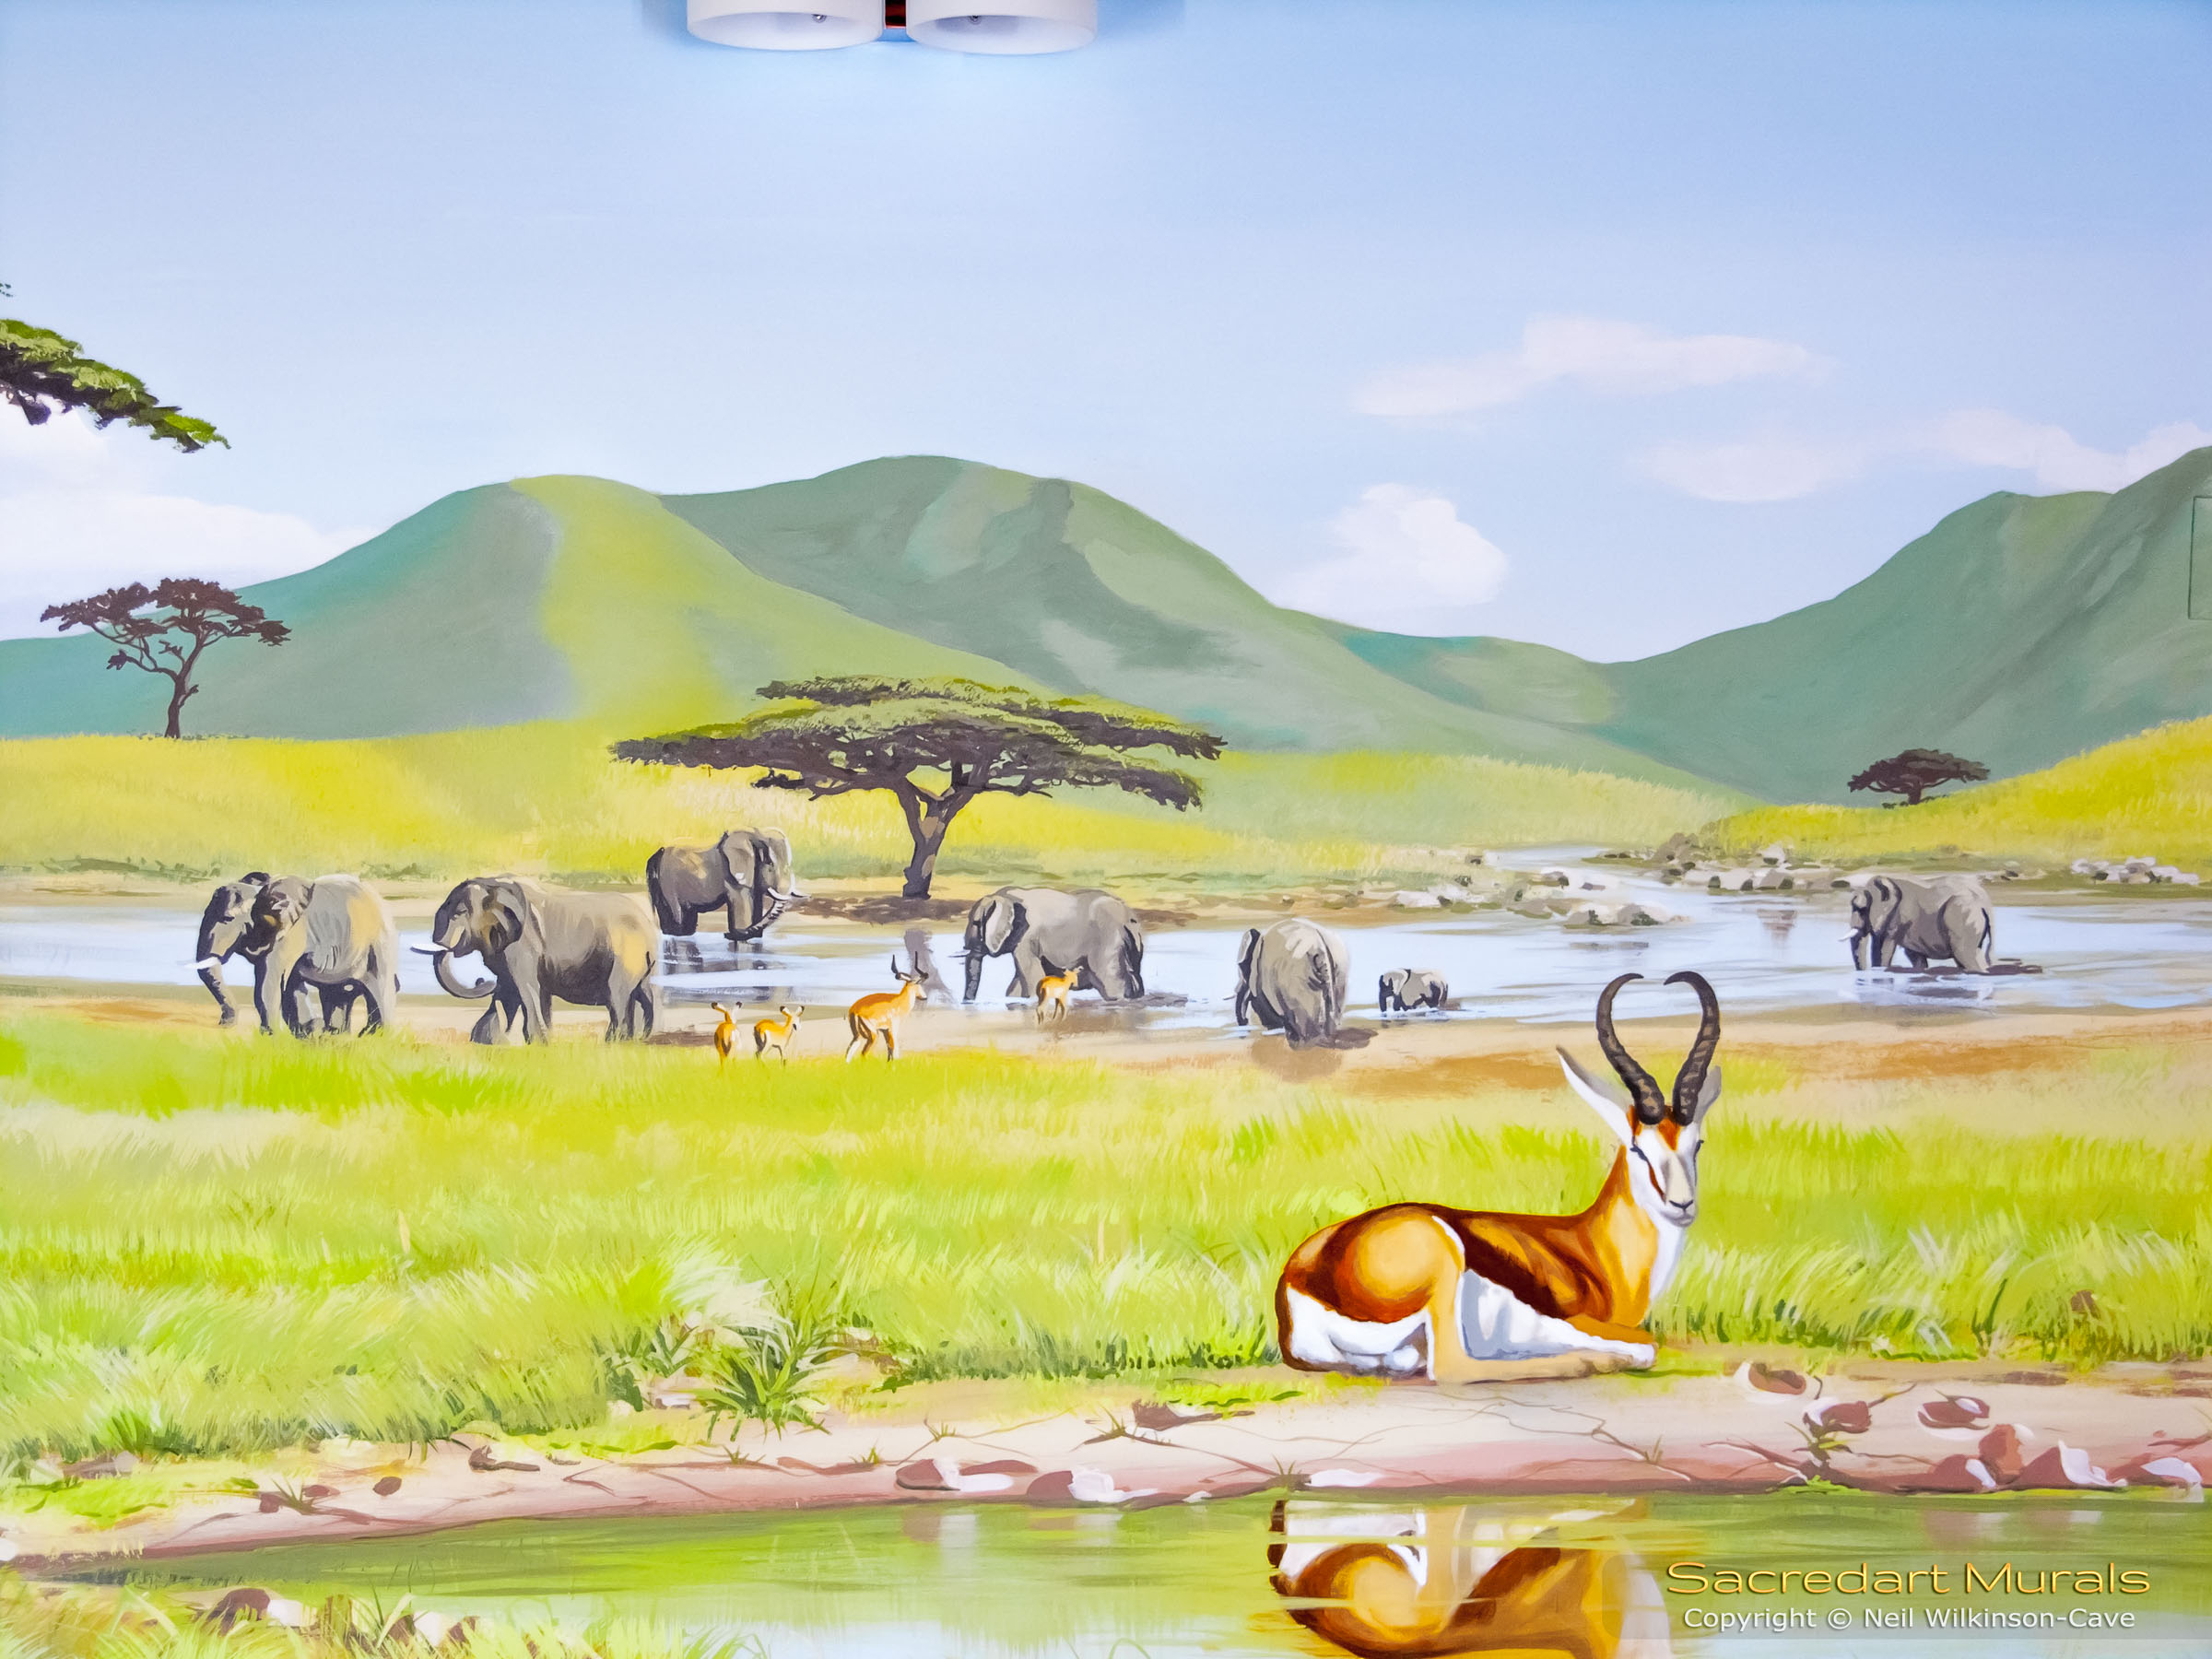 serengeti mural watering hole gazelle elephants